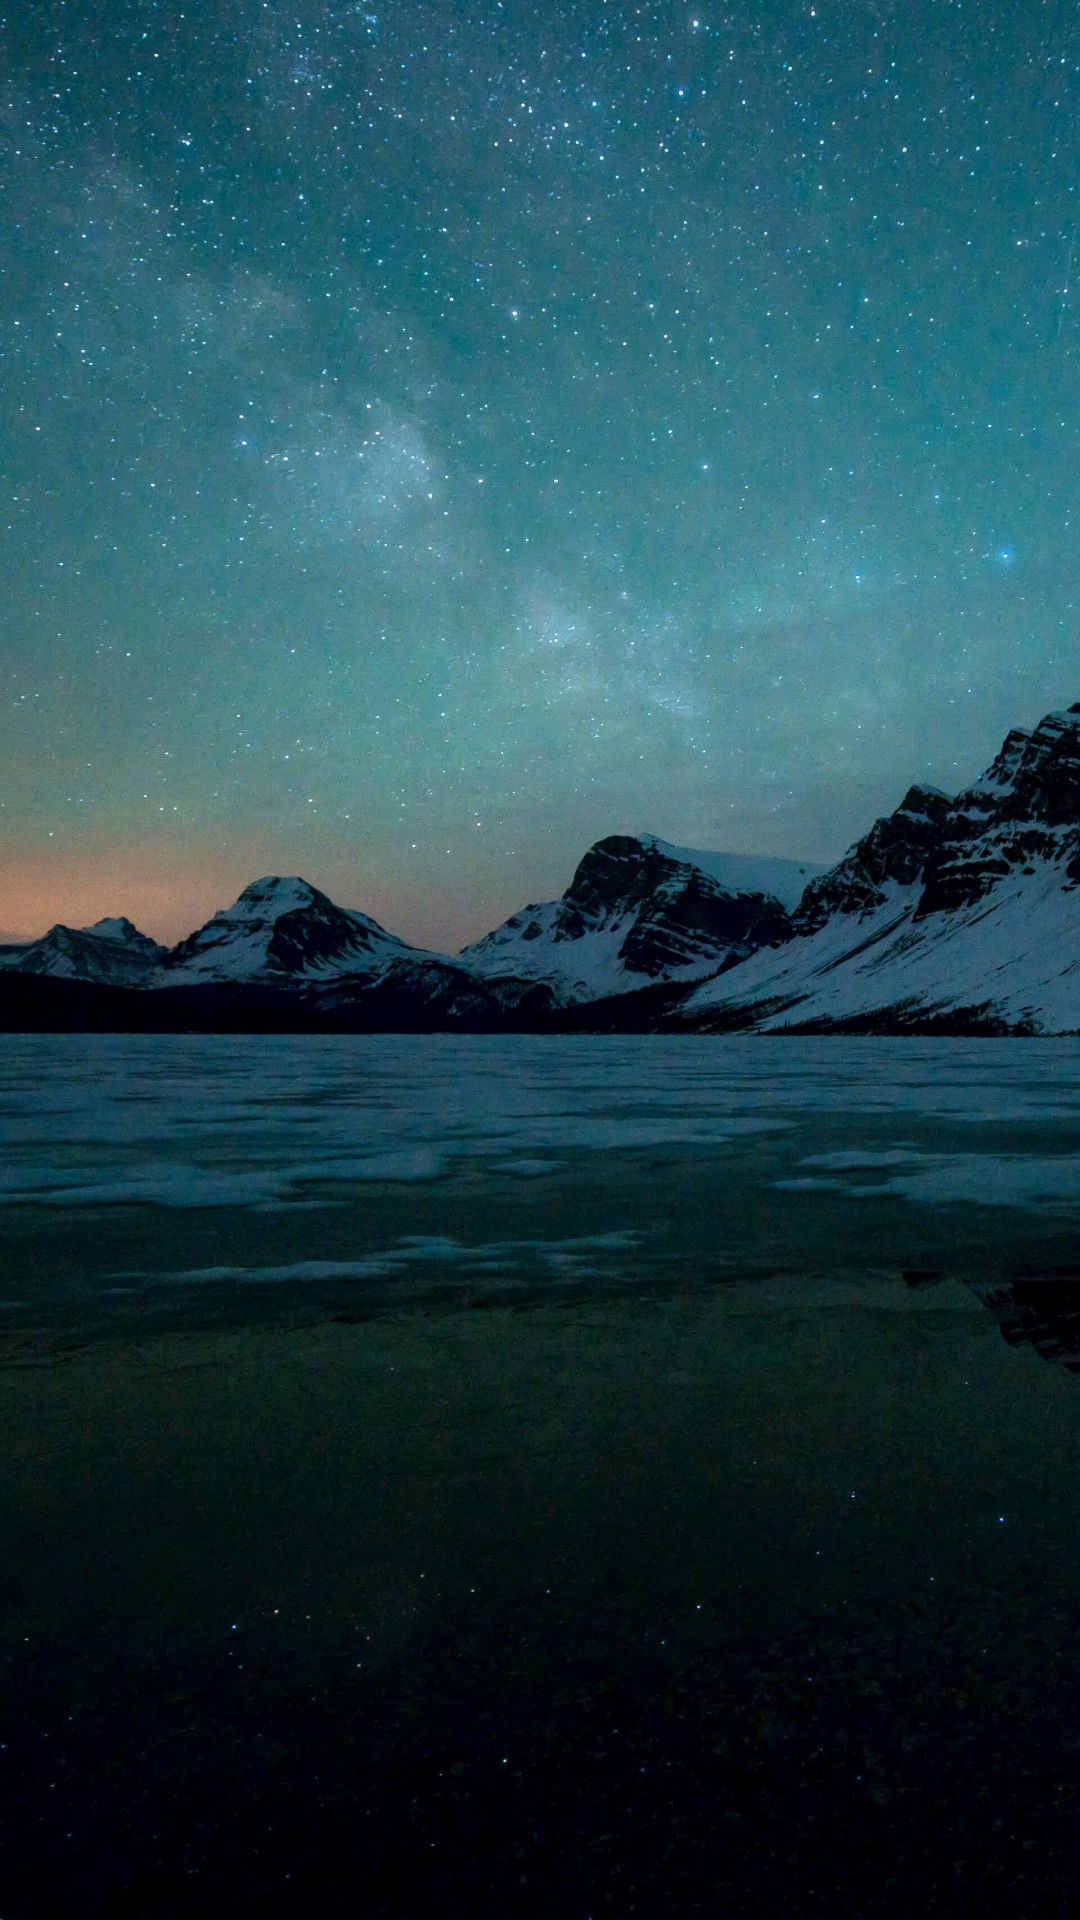 Milky Way over Bow Lake, Alberta, Canada Wallpaper for Motorola Moto X